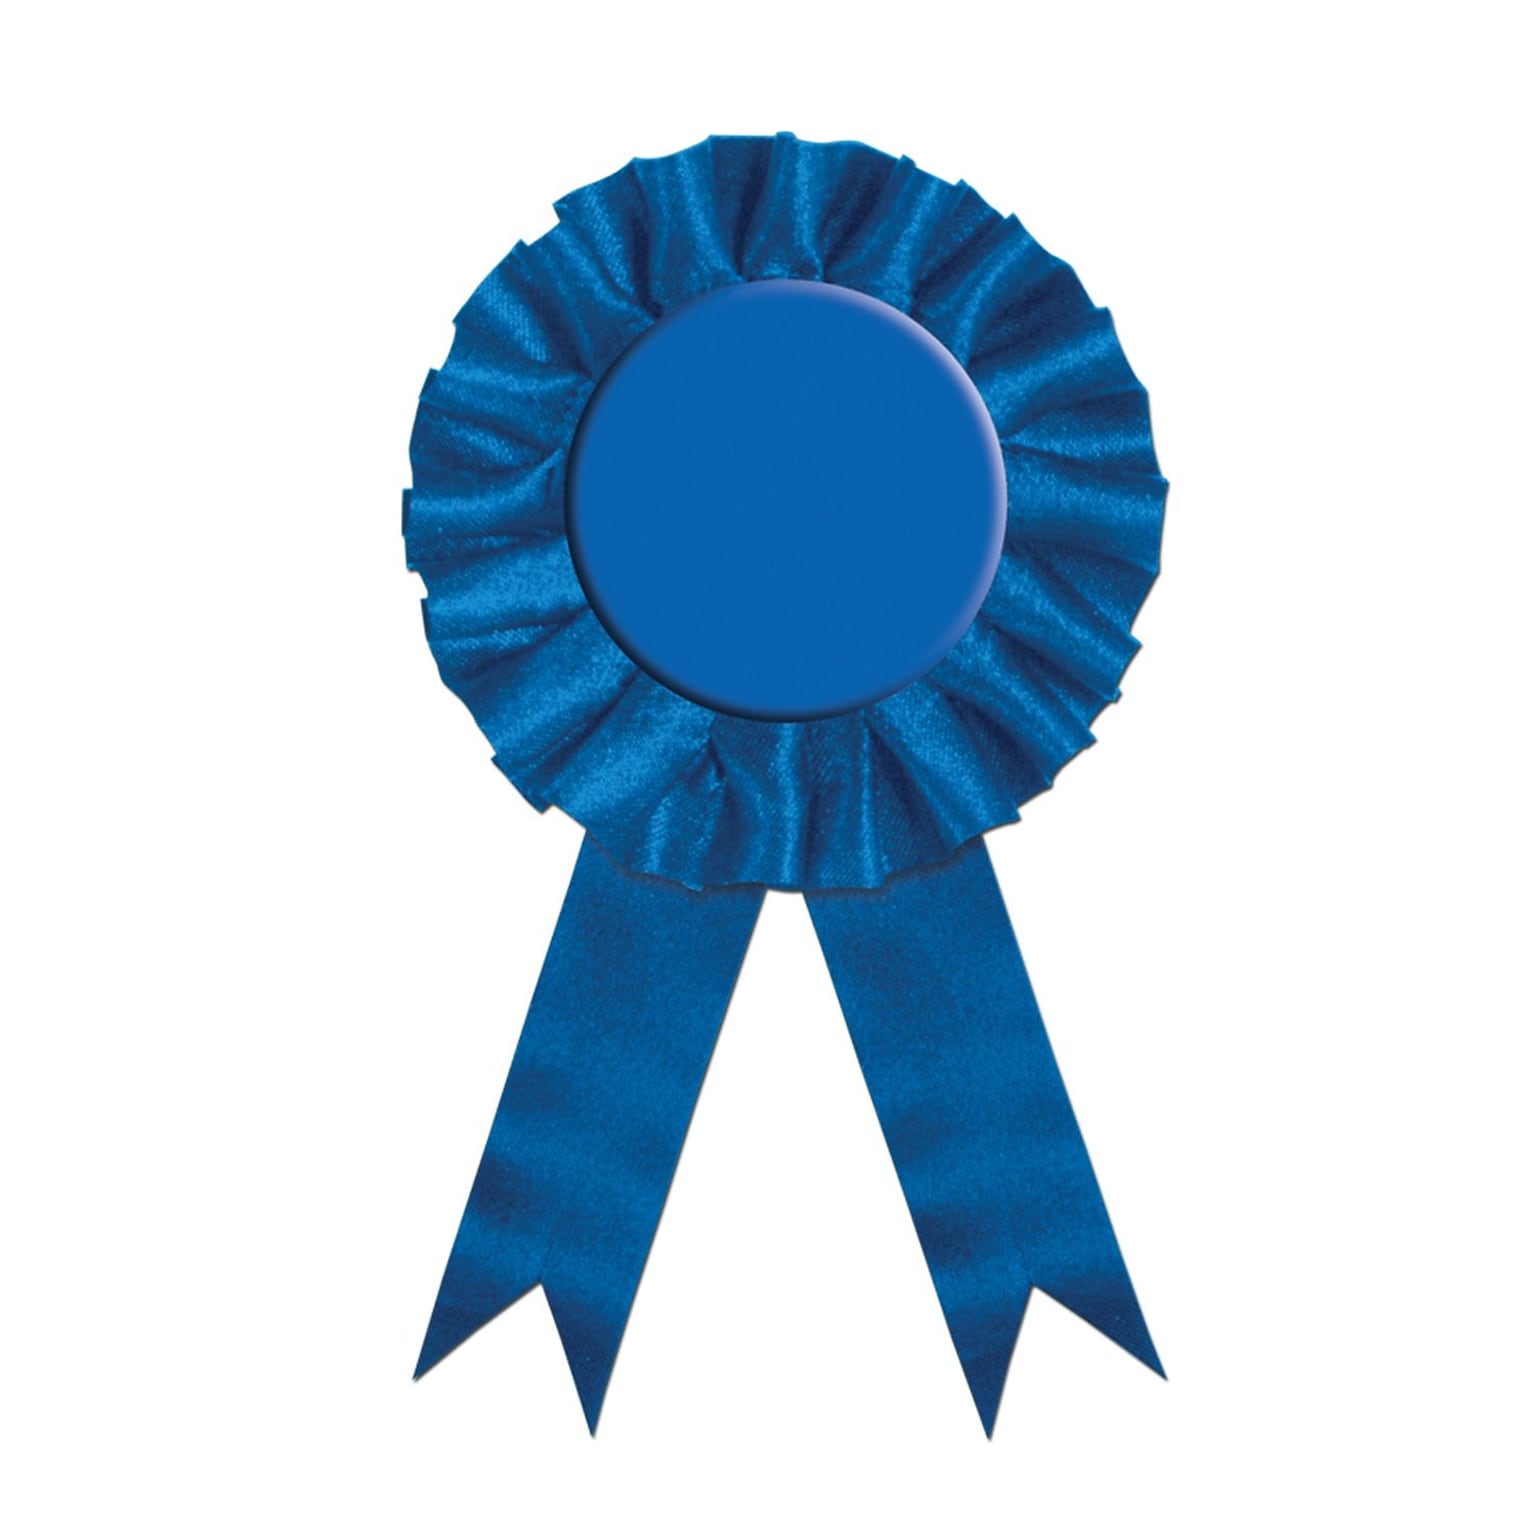 Beistle 3.75 x 6.5 Award Ribbon, Blue, Pack of 4 (60410-B)